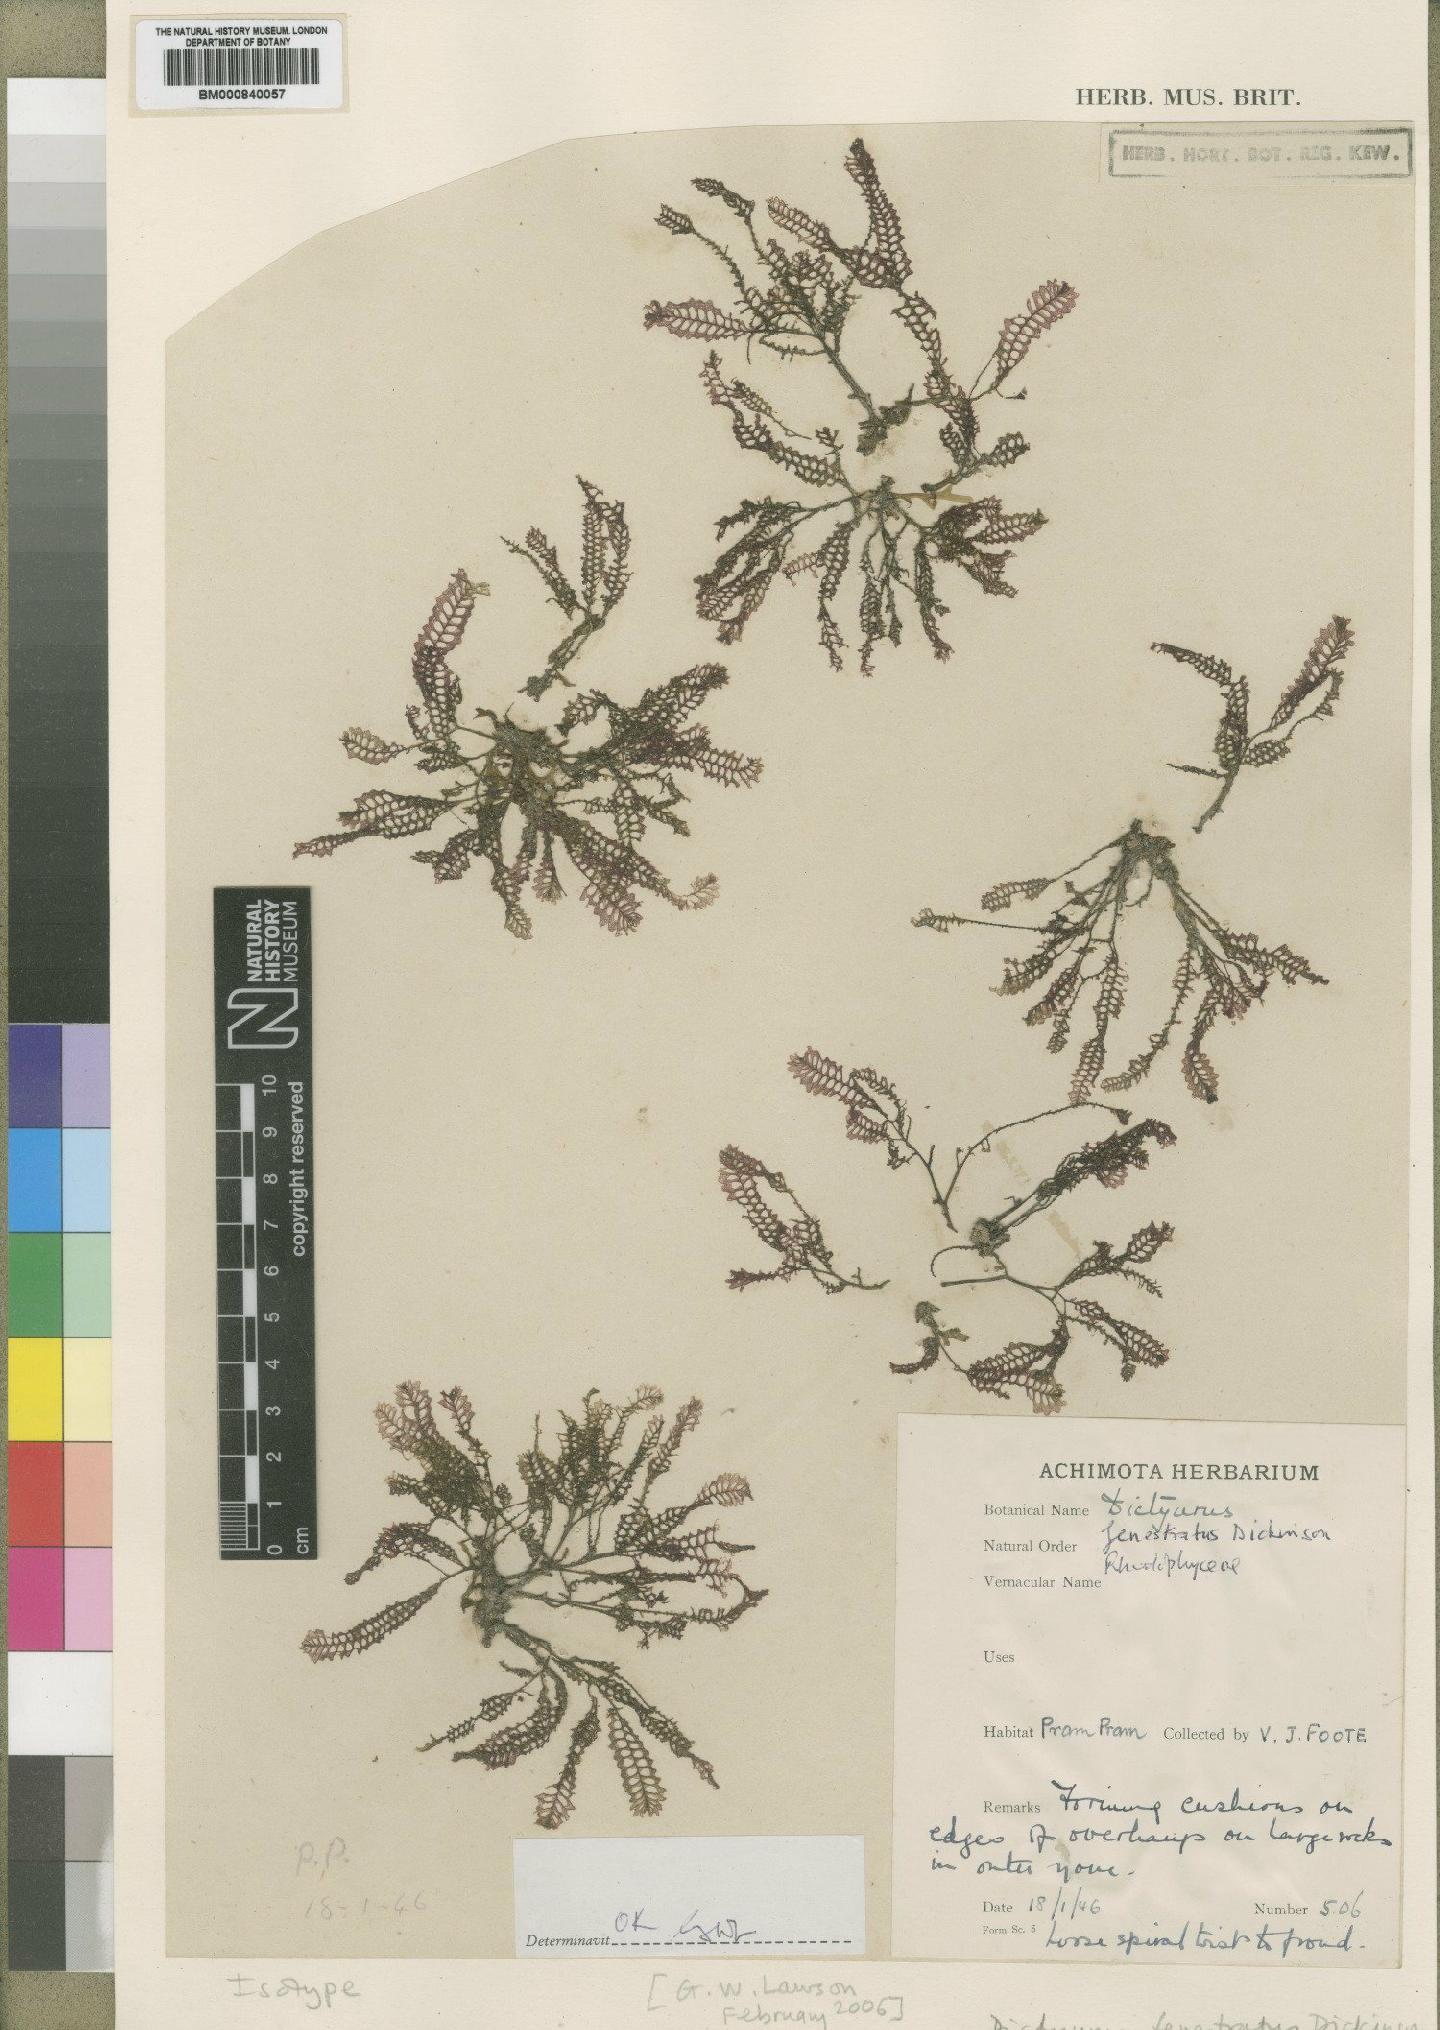 To NHMUK collection (Dictyurus fenestratus Dickinson; Isotype; NHMUK:ecatalogue:4519064)